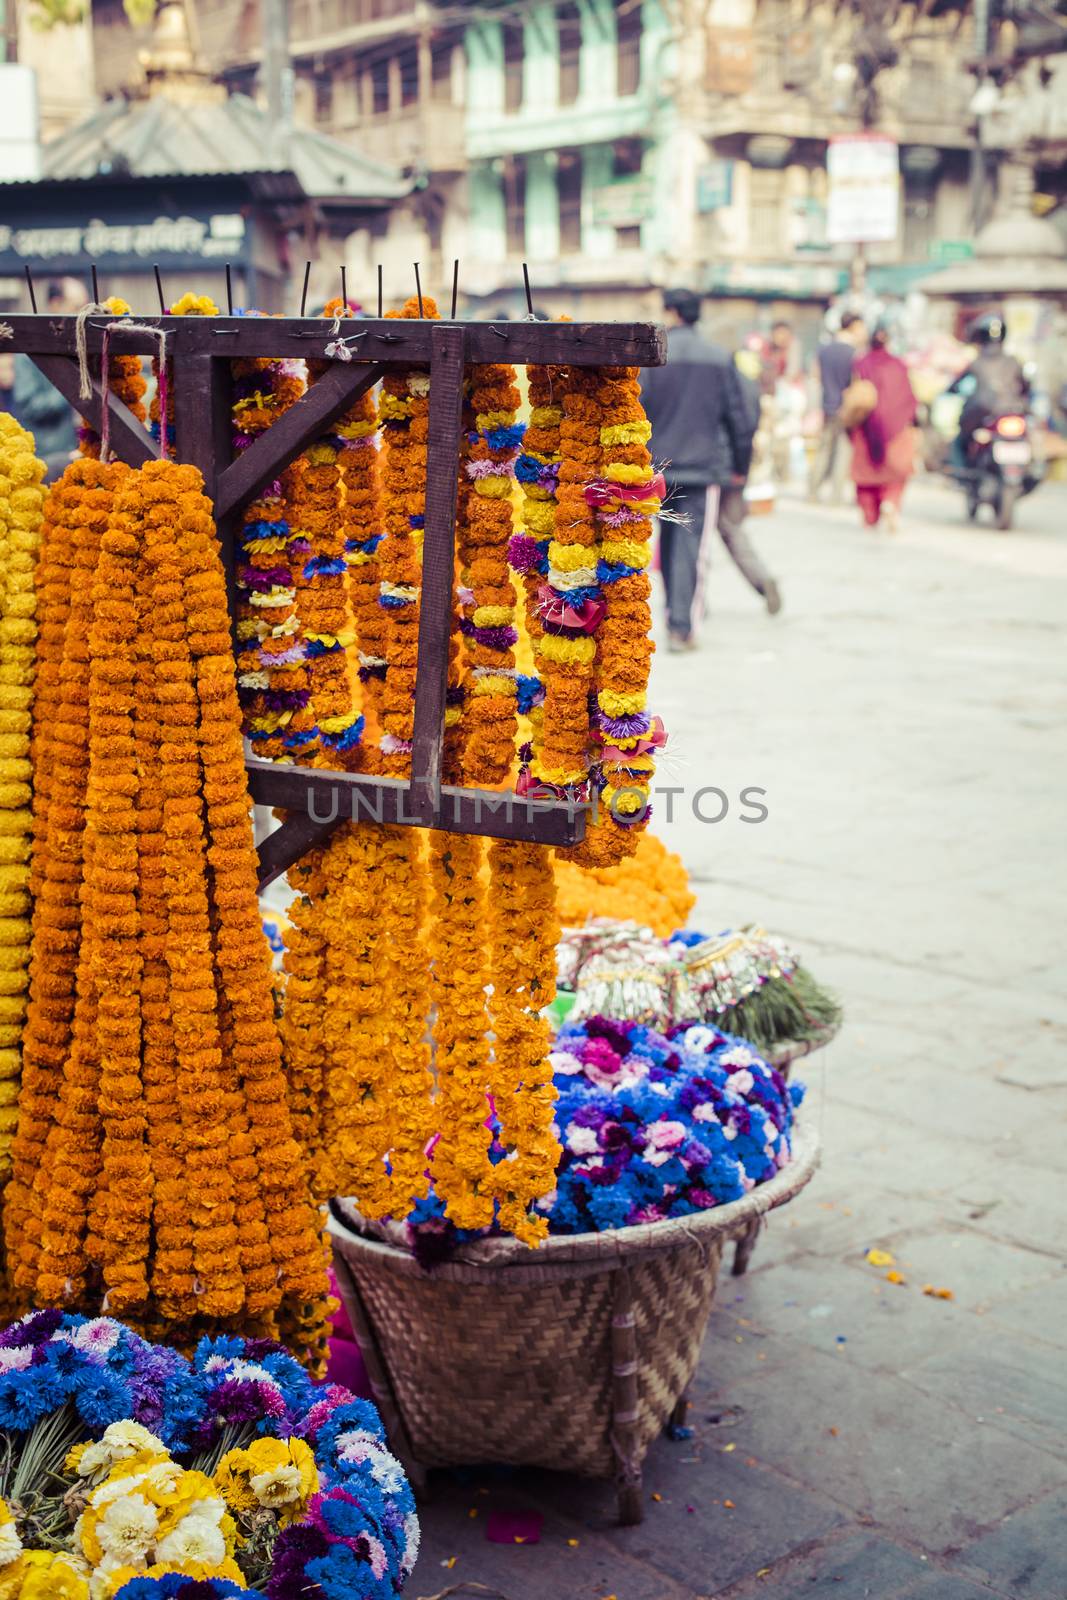 The street vendor sels his fruits and vegetables in Thamel in Kathmandu, Nepal.